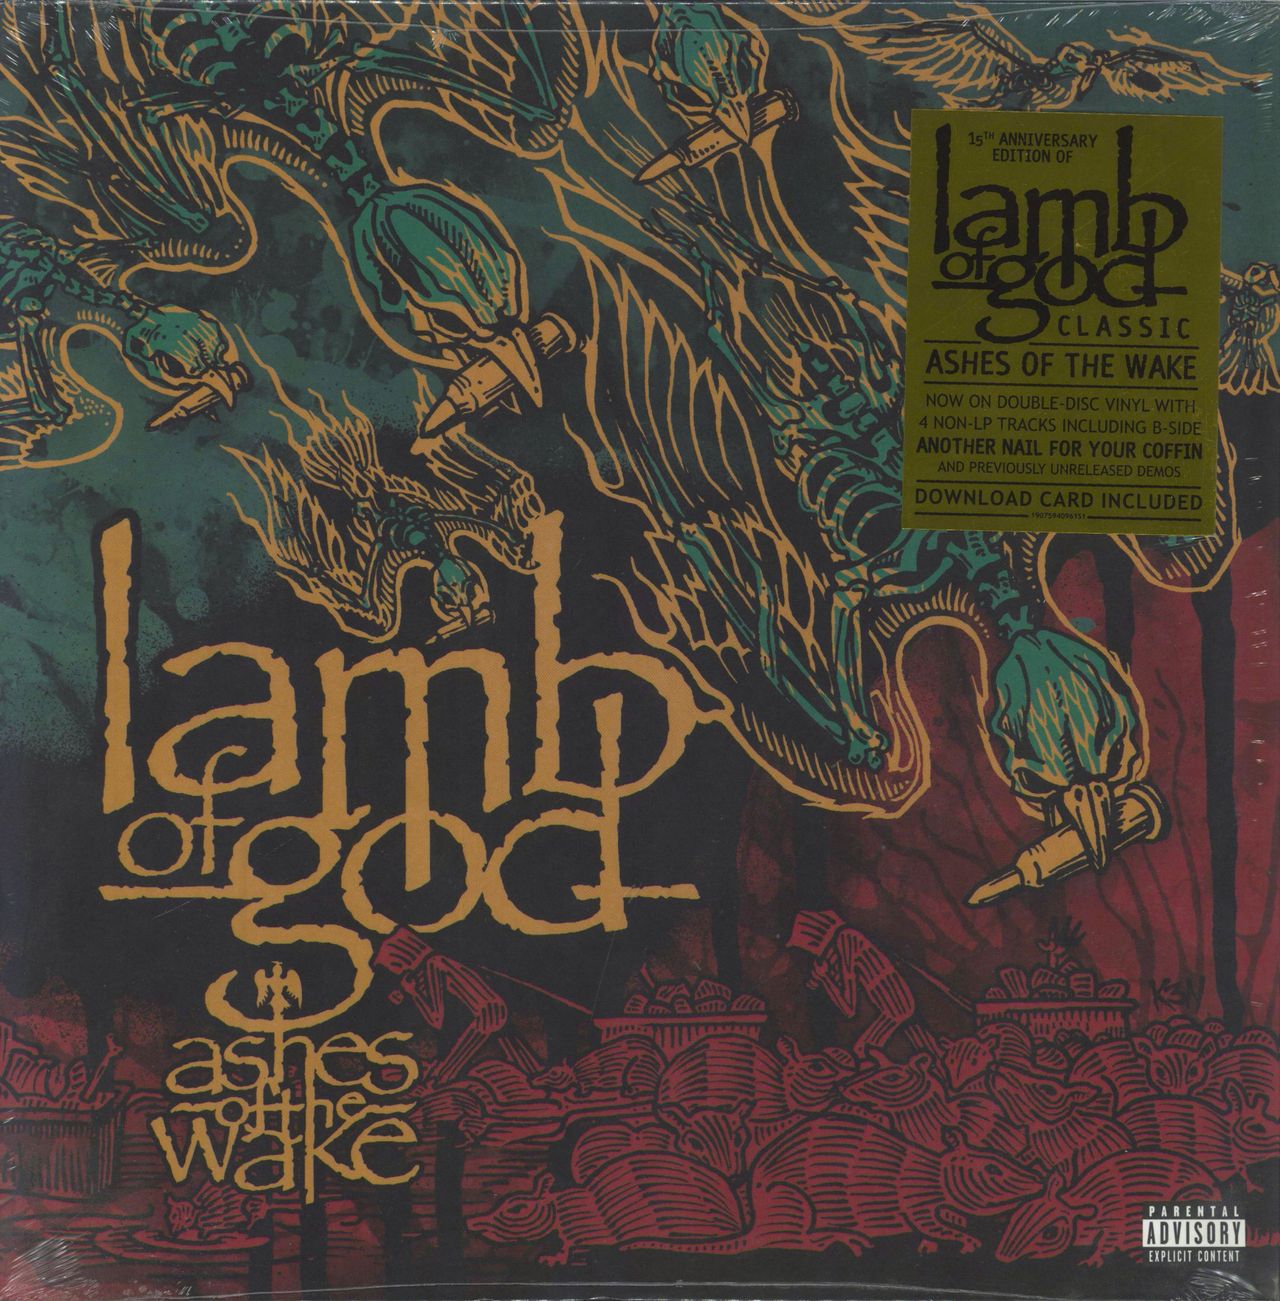 Lamb Of God Ashes Of The Wake UK 2-LP vinyl set — RareVinyl.com